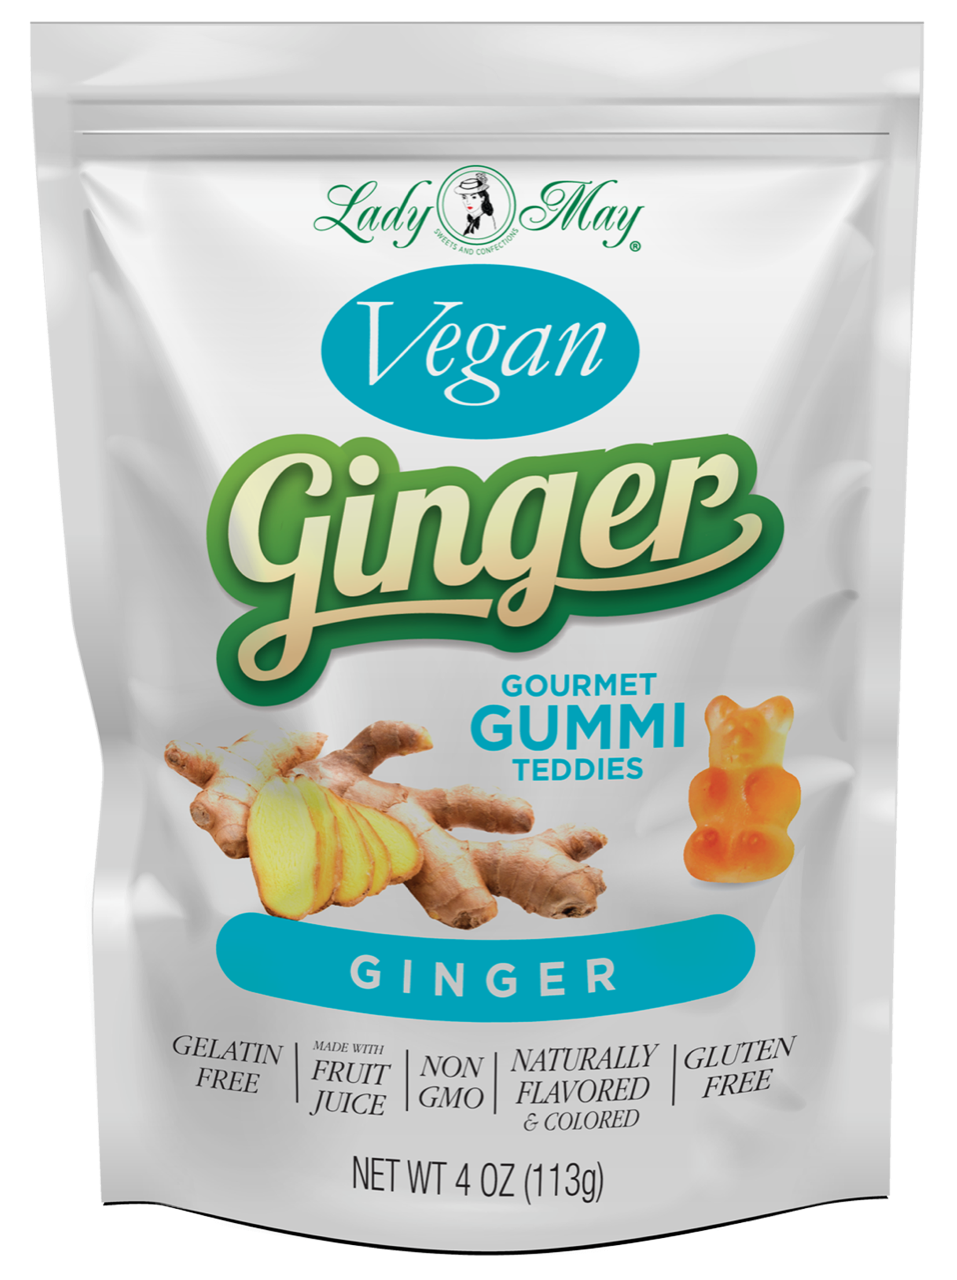 Vegan Ginger Gummi Teddies